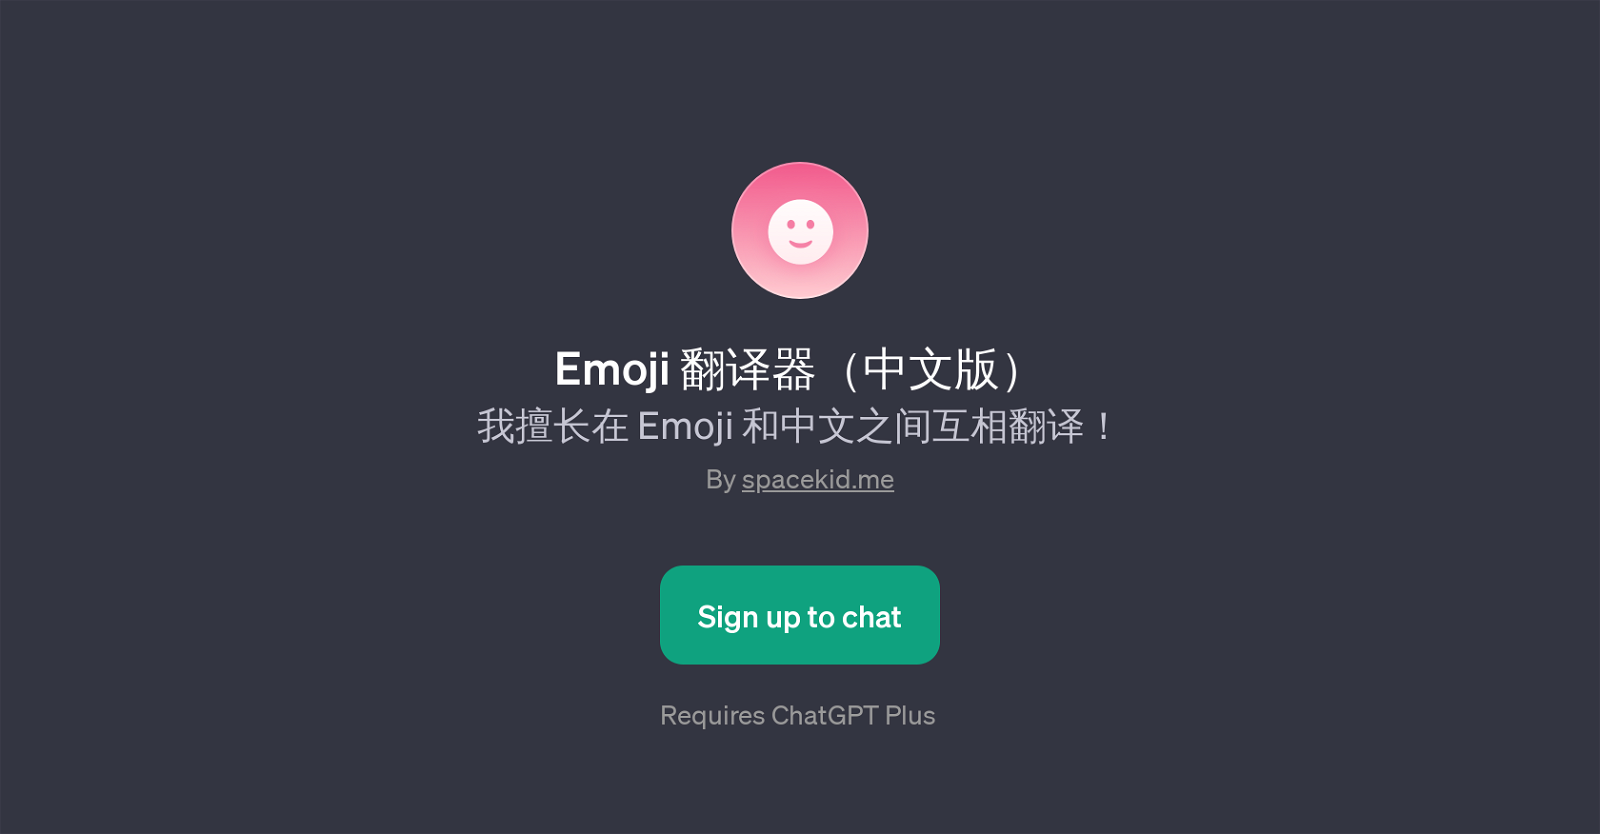 Emoji website